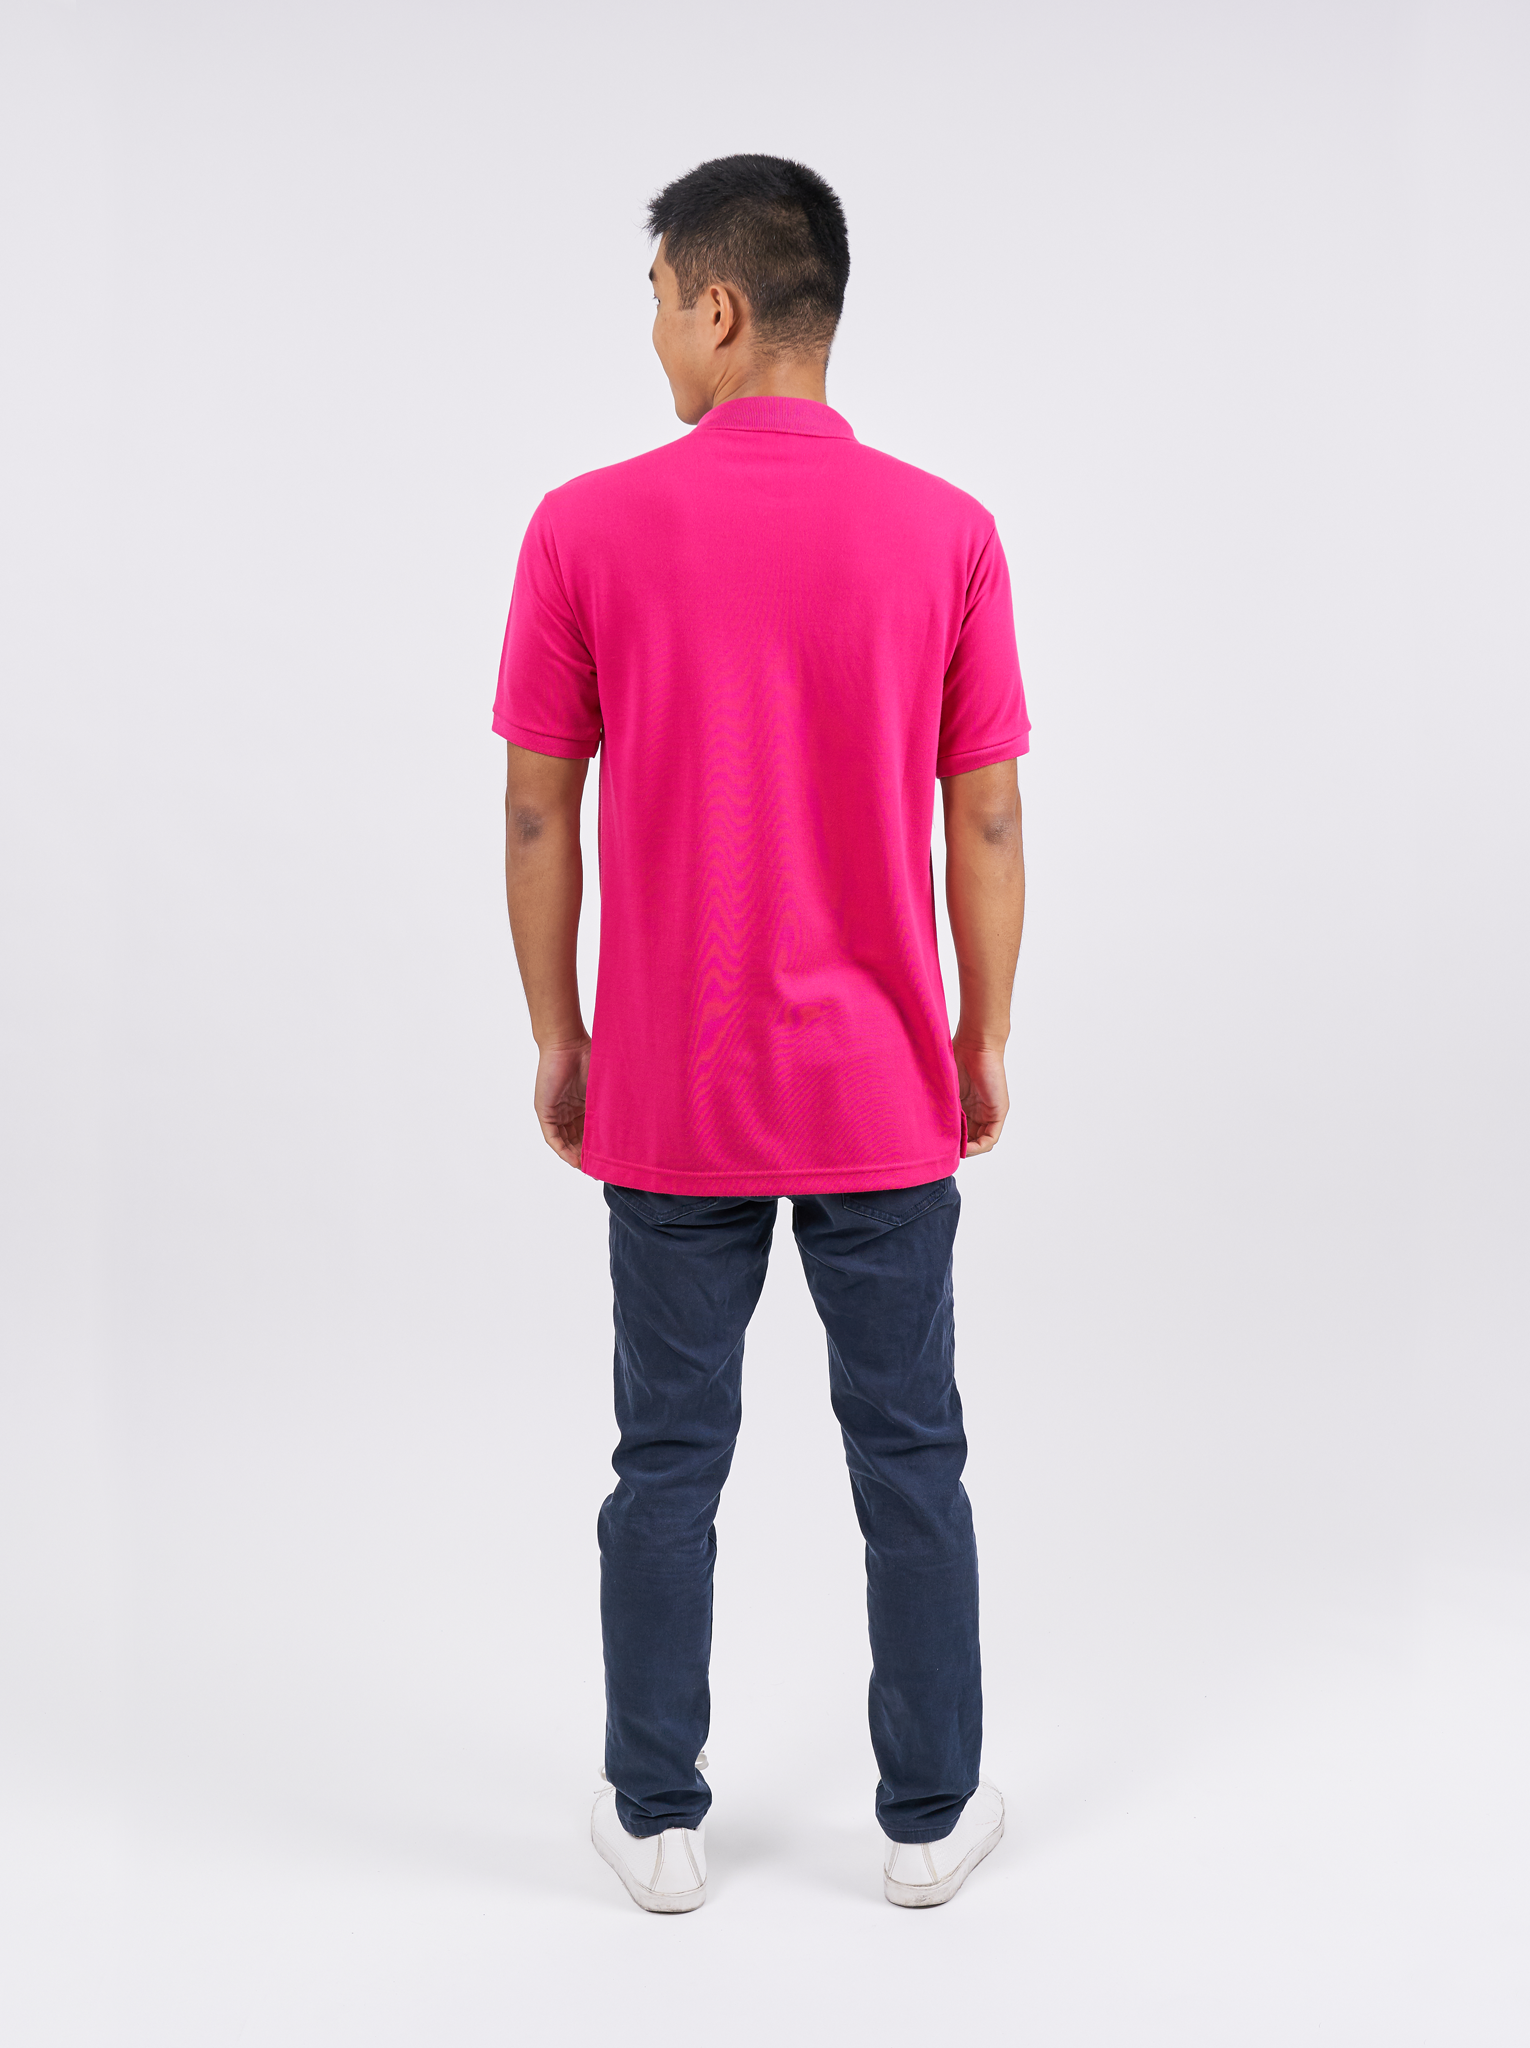 Polo Shirt เสื้อโปโล (Hot Pink, สีชมพูบานเย็น)(Unisex)